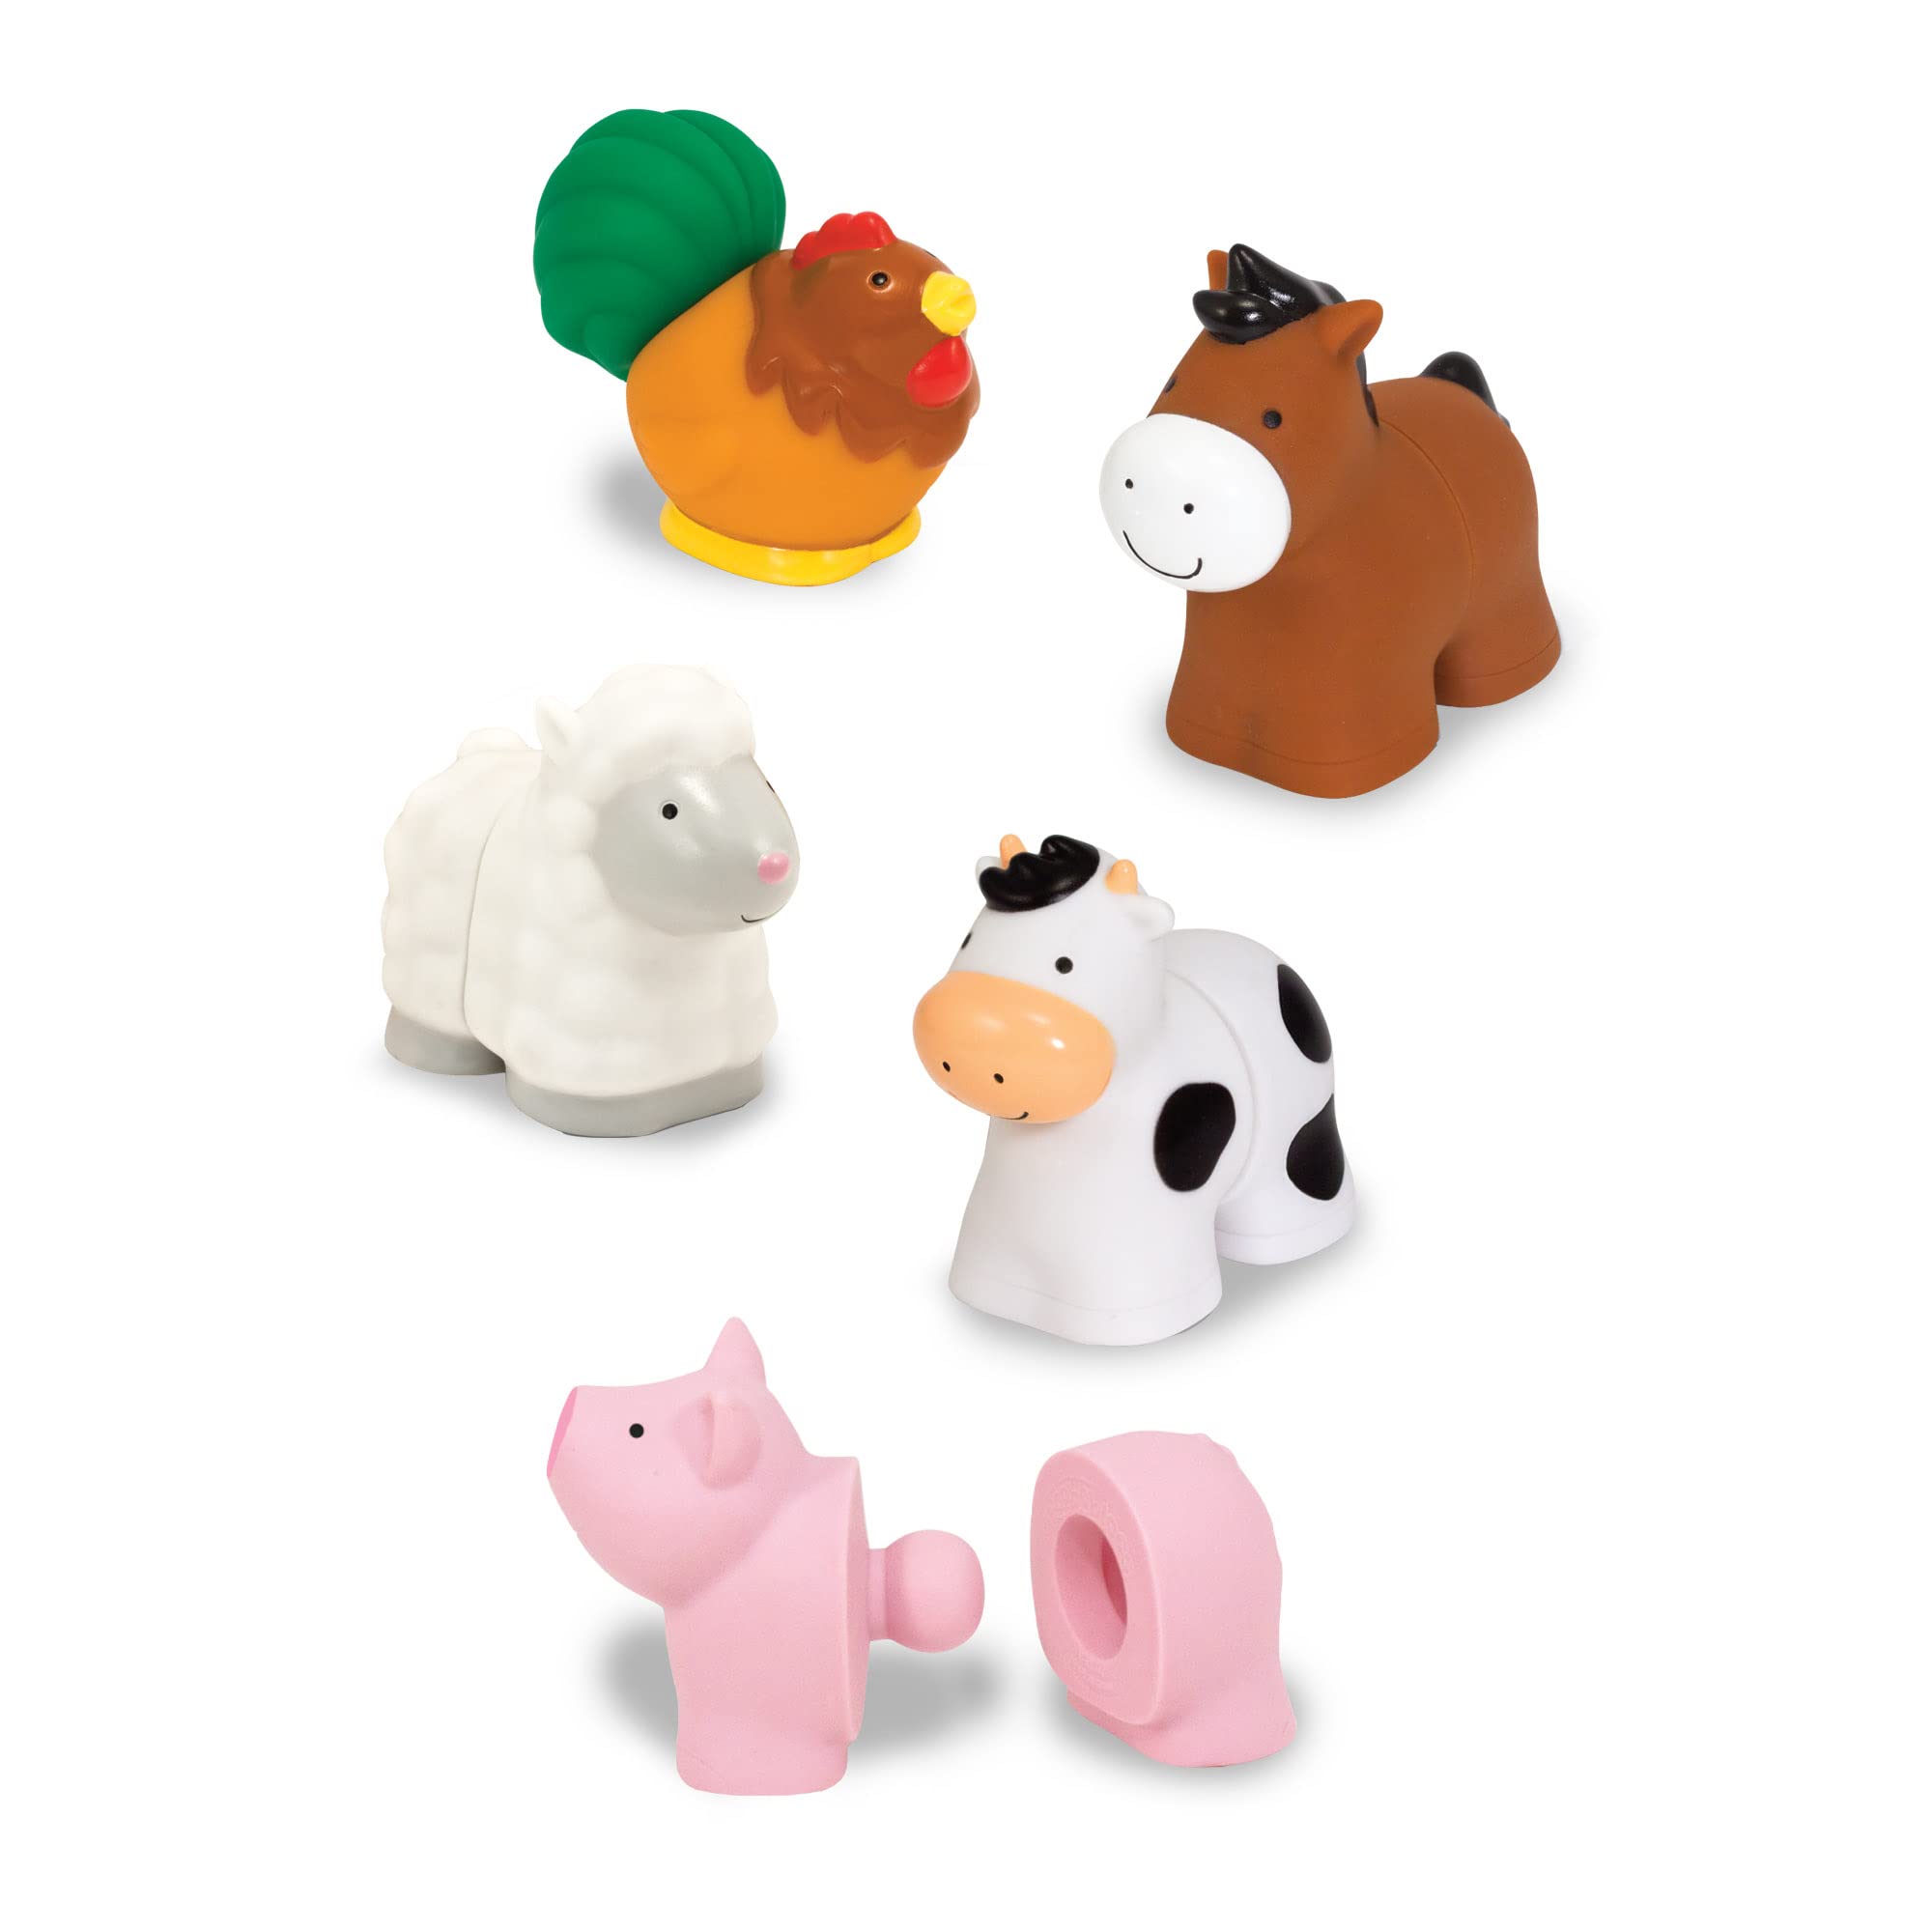 Melissa & Doug Pop Blocs Farm Animals Educational Baby Toy - 10 Linkable Pieces